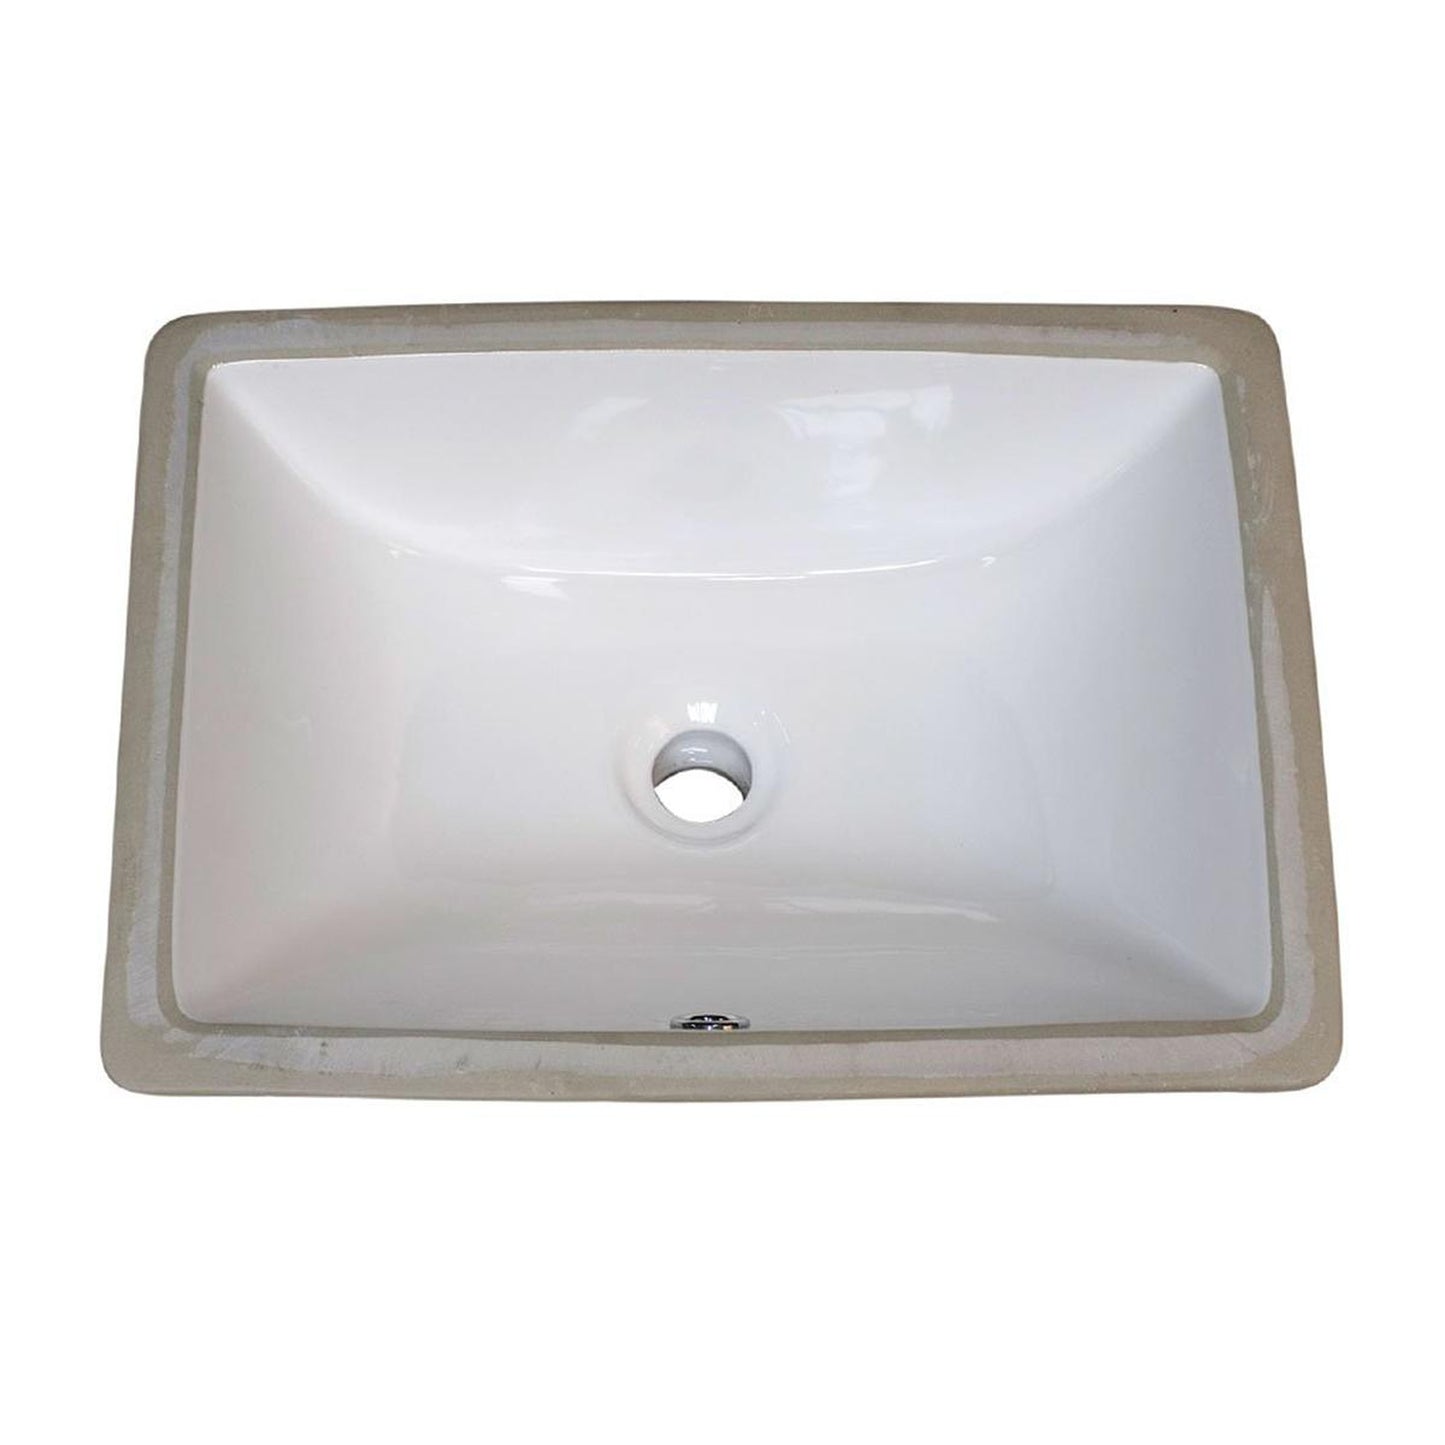 Pelican Int'l Pearl Series PL-3088 16" x 11" White Porcelain Undermount Bathroom Sink